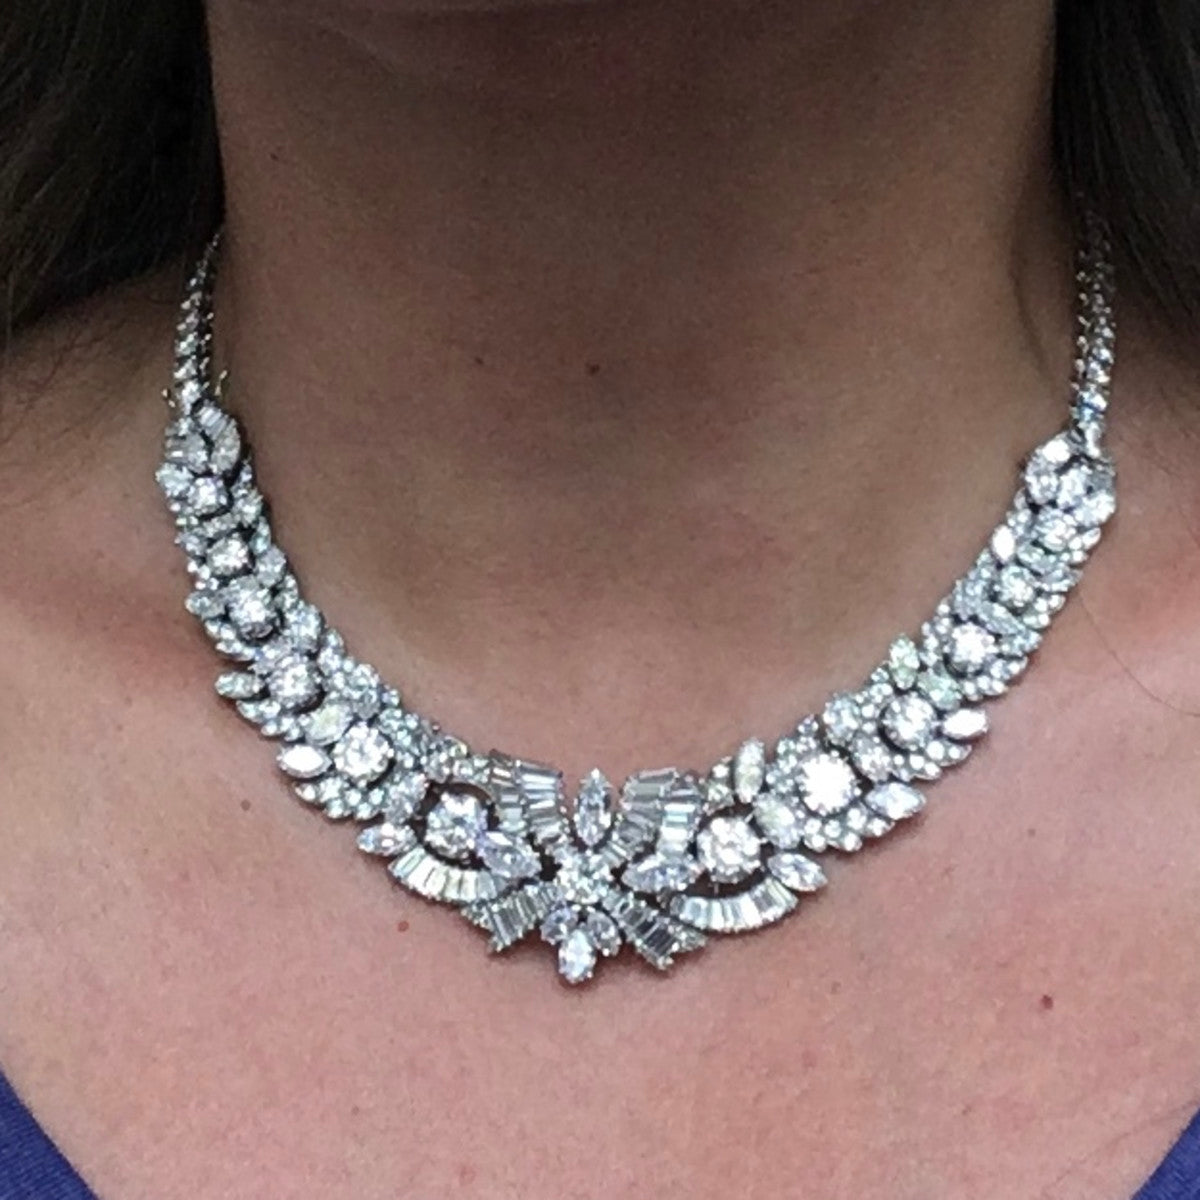 1950s Platinum Diamond Necklace worn on neck